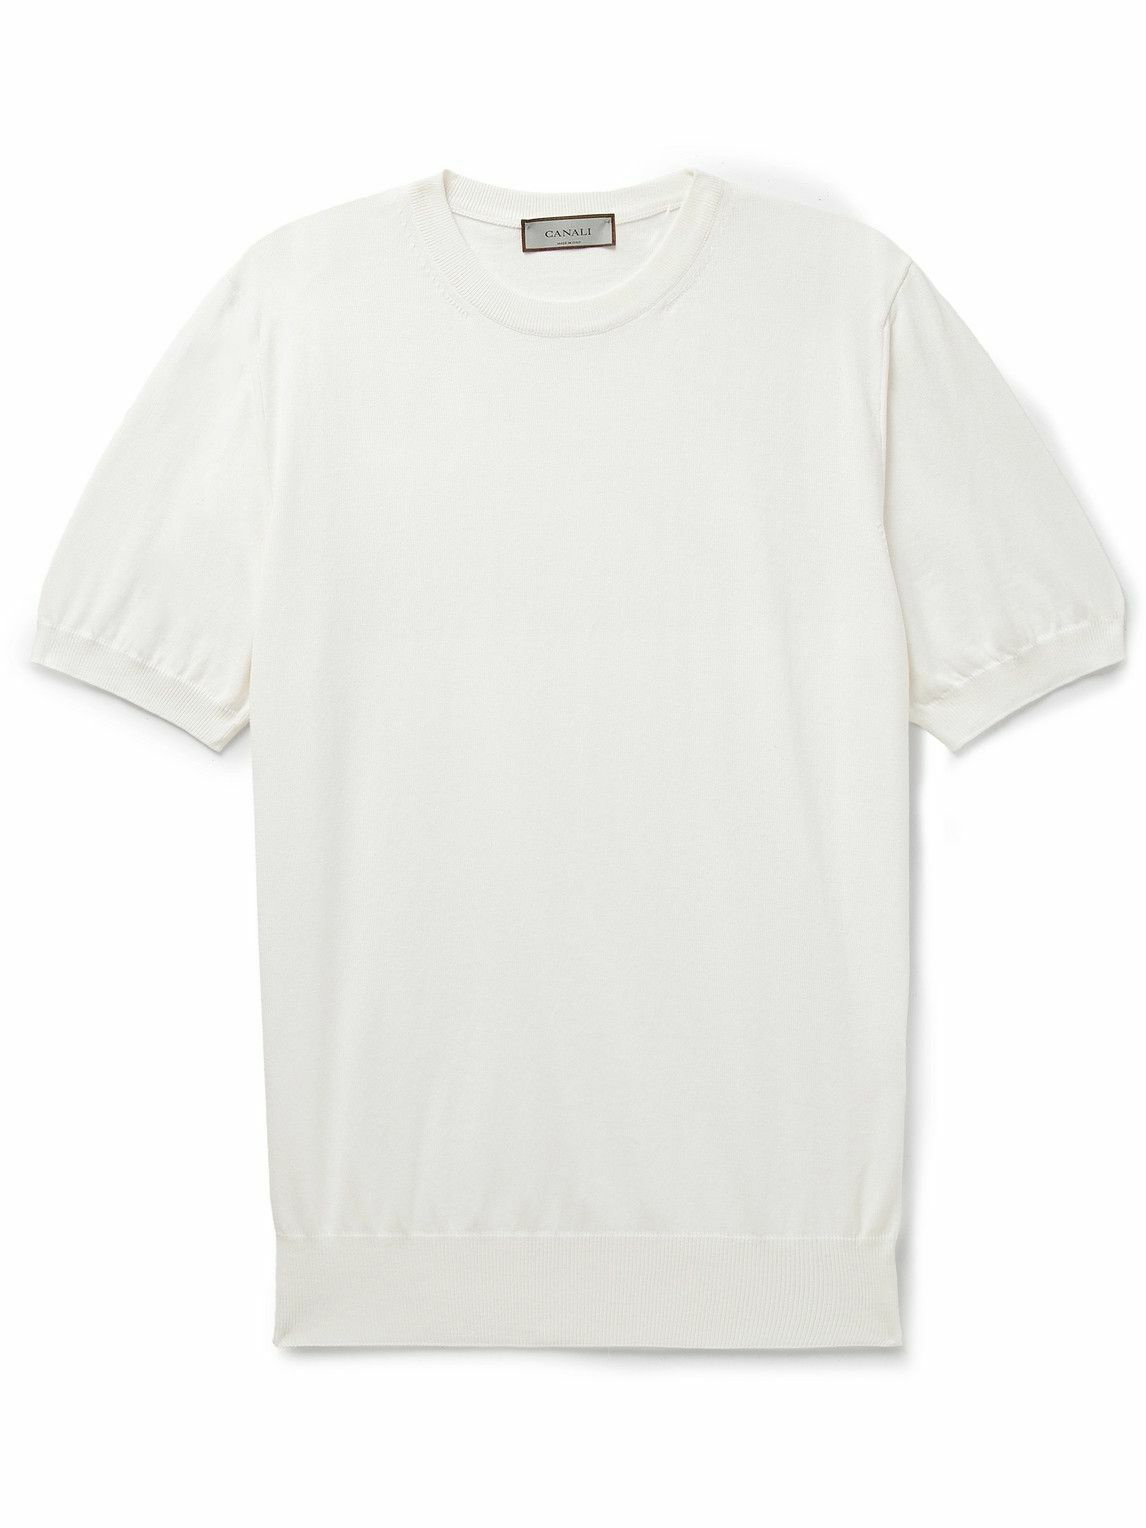 Photo: Canali - Cotton T-Shirt - White